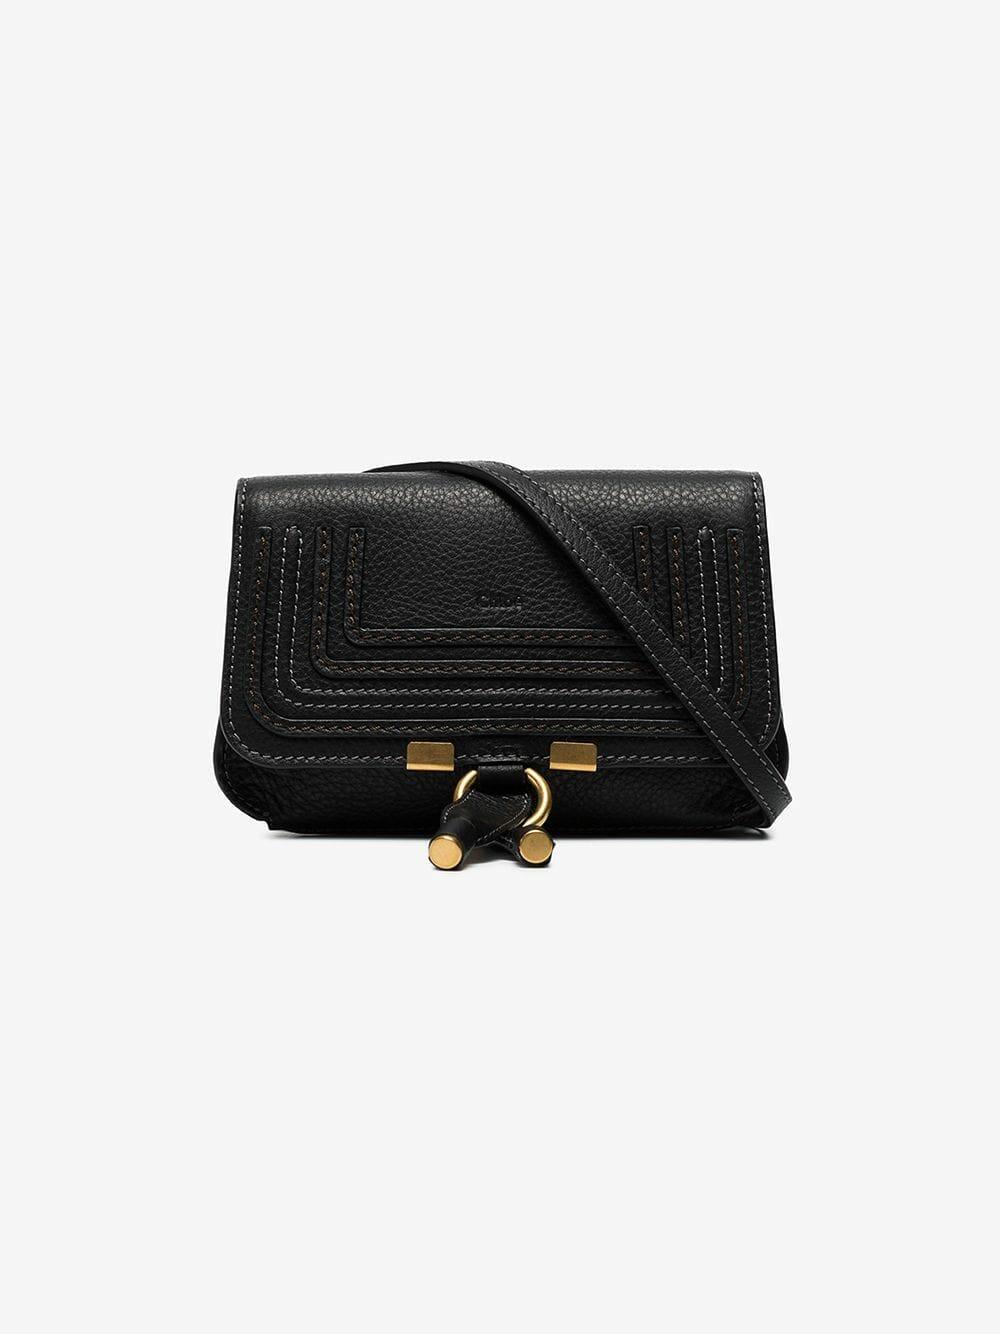 Sold! LV belt bag/wallet/mini-purse CLEARANCE!